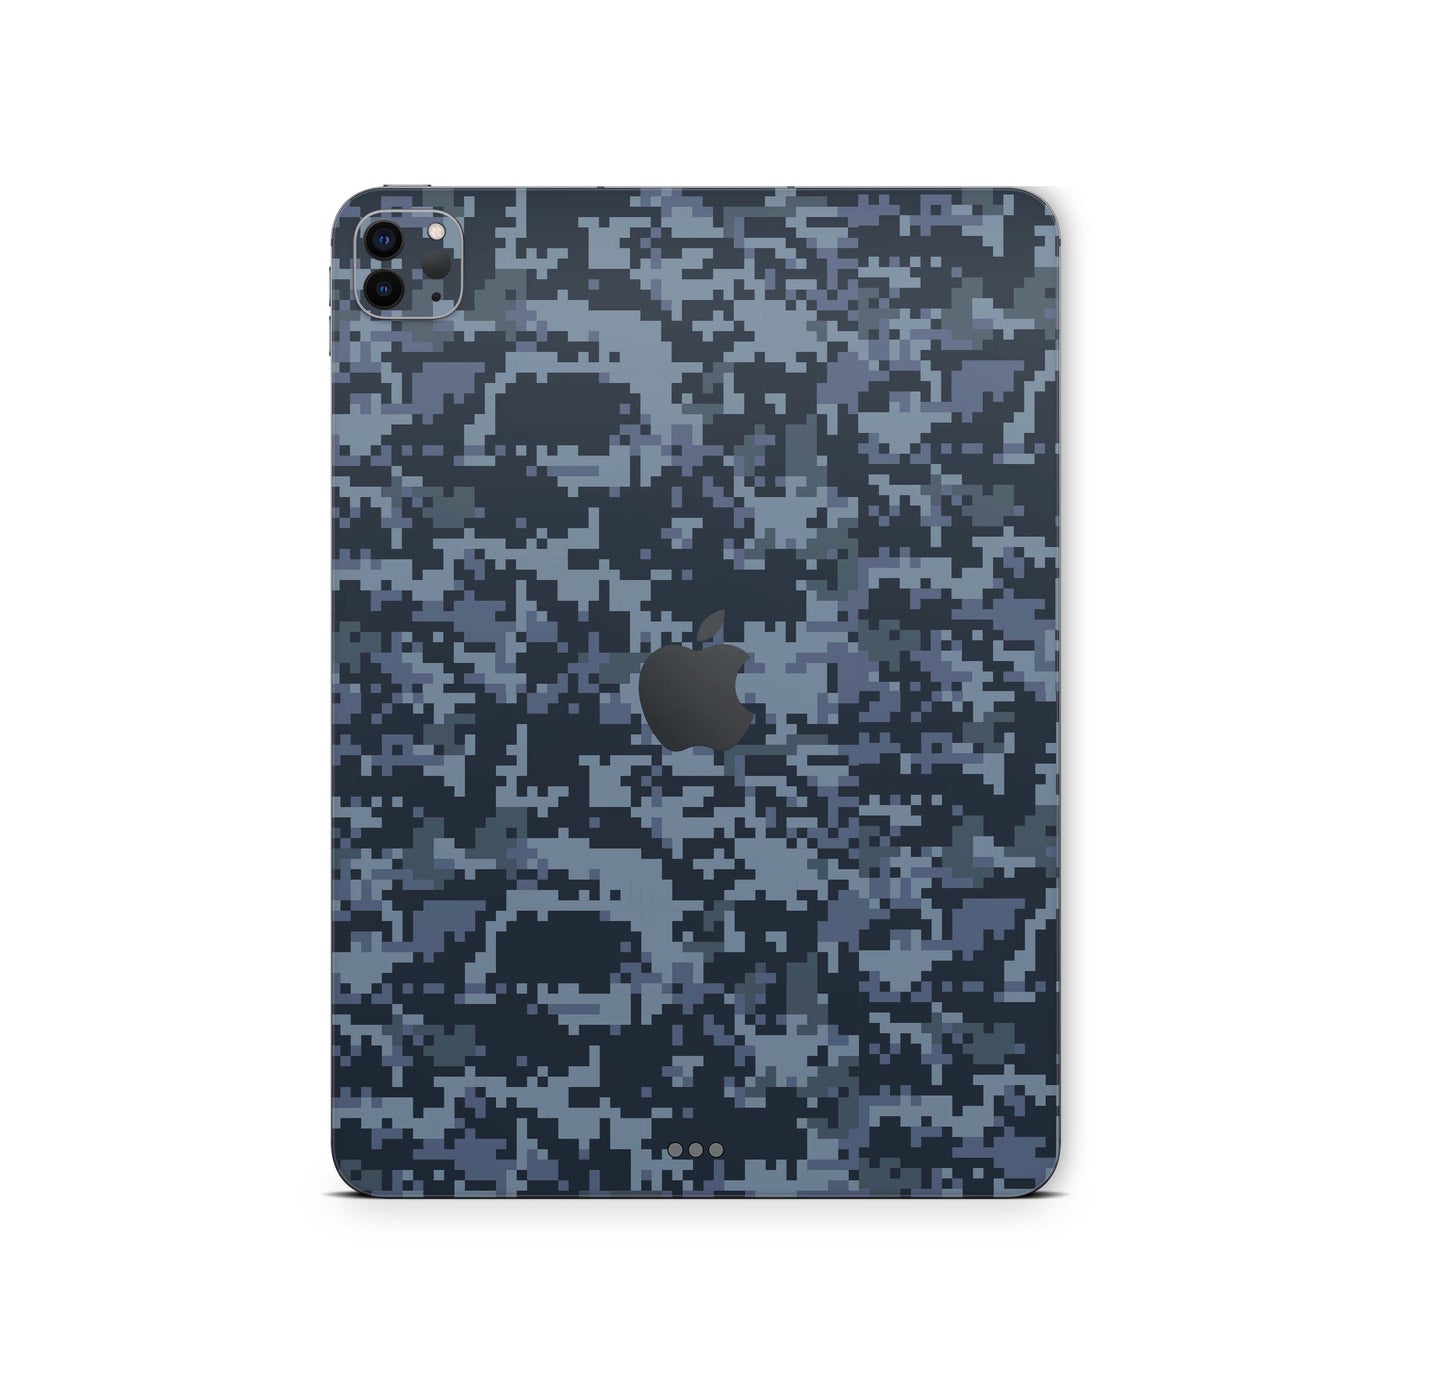 iPad Pro Skin 11" 3.Generation M1 2021 Design Cover Folie Vinyl Skins & Wraps Aufkleber Skins4u Navy-Camo  